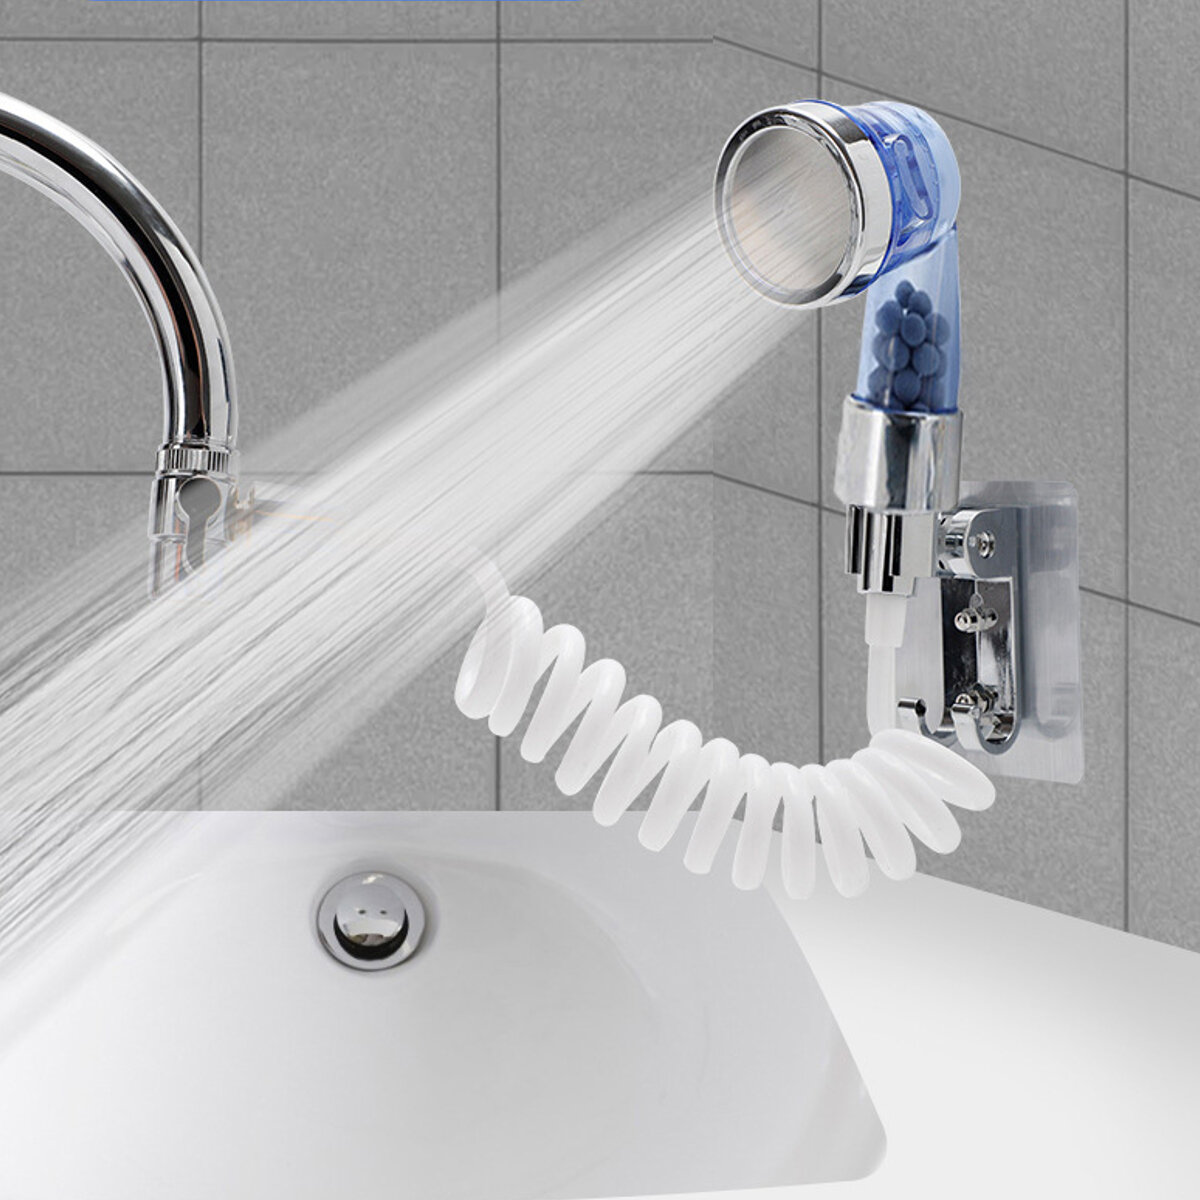 

Bathroom Wash Face Basin Water Tap External Shower Head 3 Water Modes Adjustable Faucet Rinser Extension Sprinkler+Base+